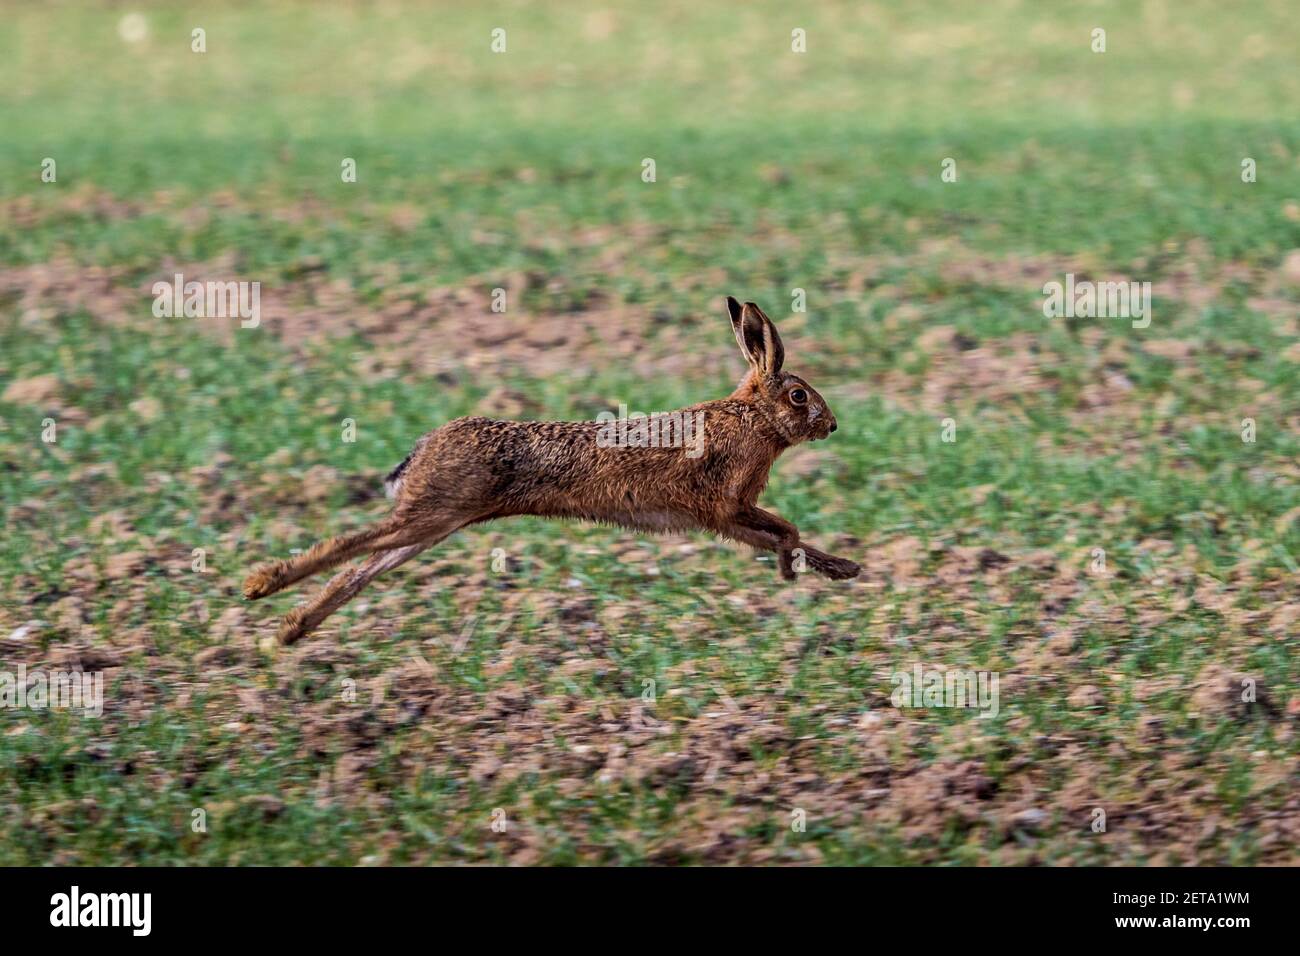 Running Hare - European Hare corriendo a través de un campo en Cambridgeshire Sur de Inglaterra. Liebre marrón corriendo. Lepus europaeus. Foto de stock